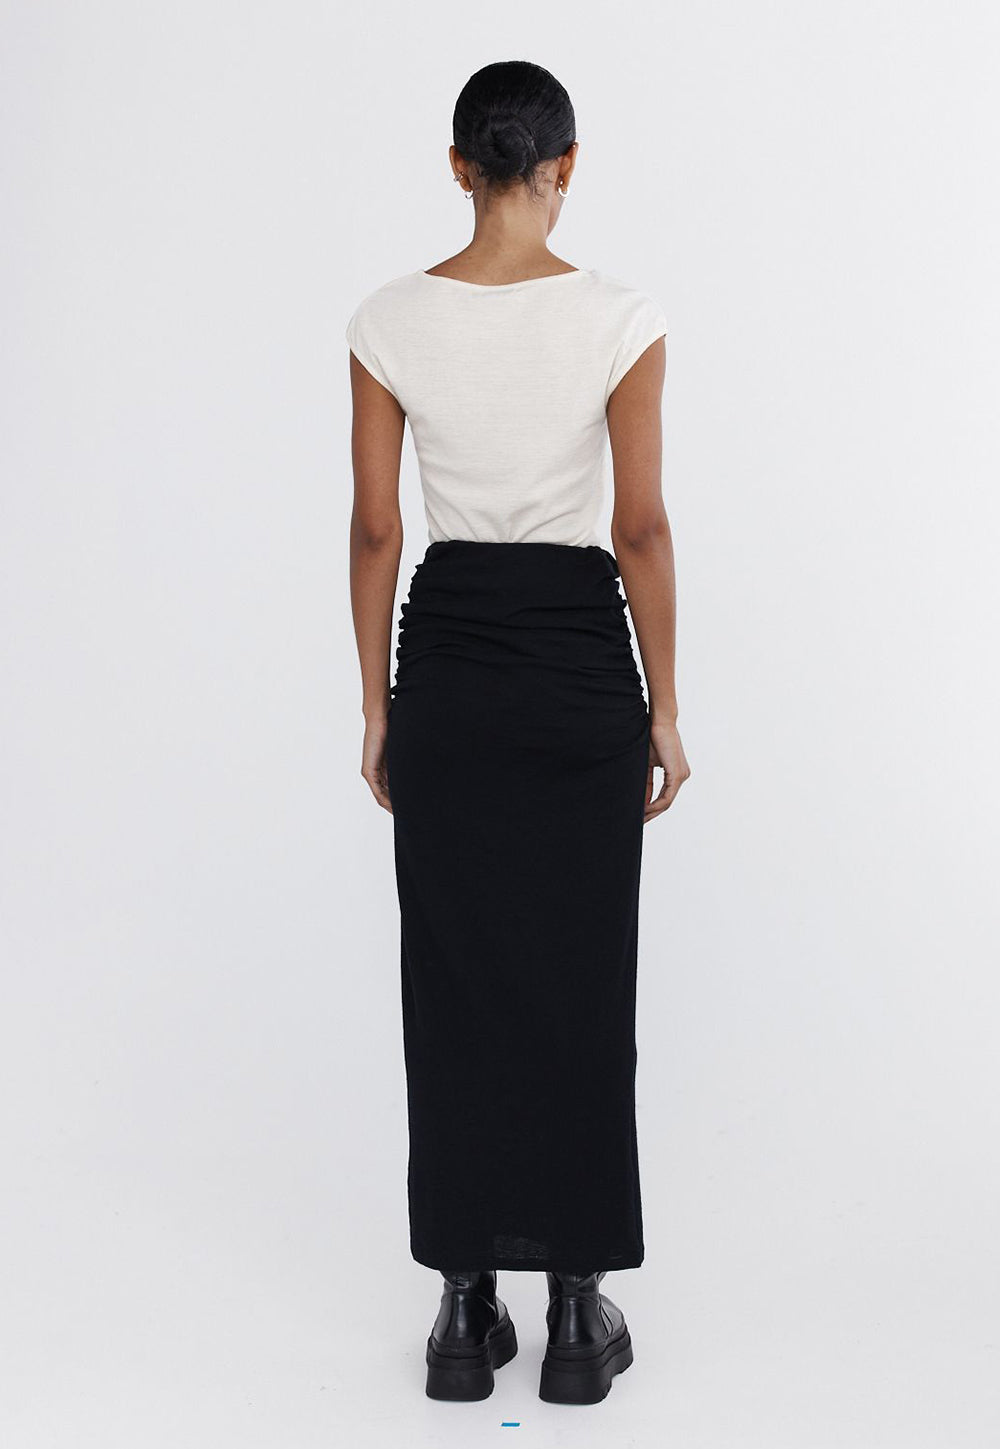 Sofina Skirt - Black sold by Angel Divine